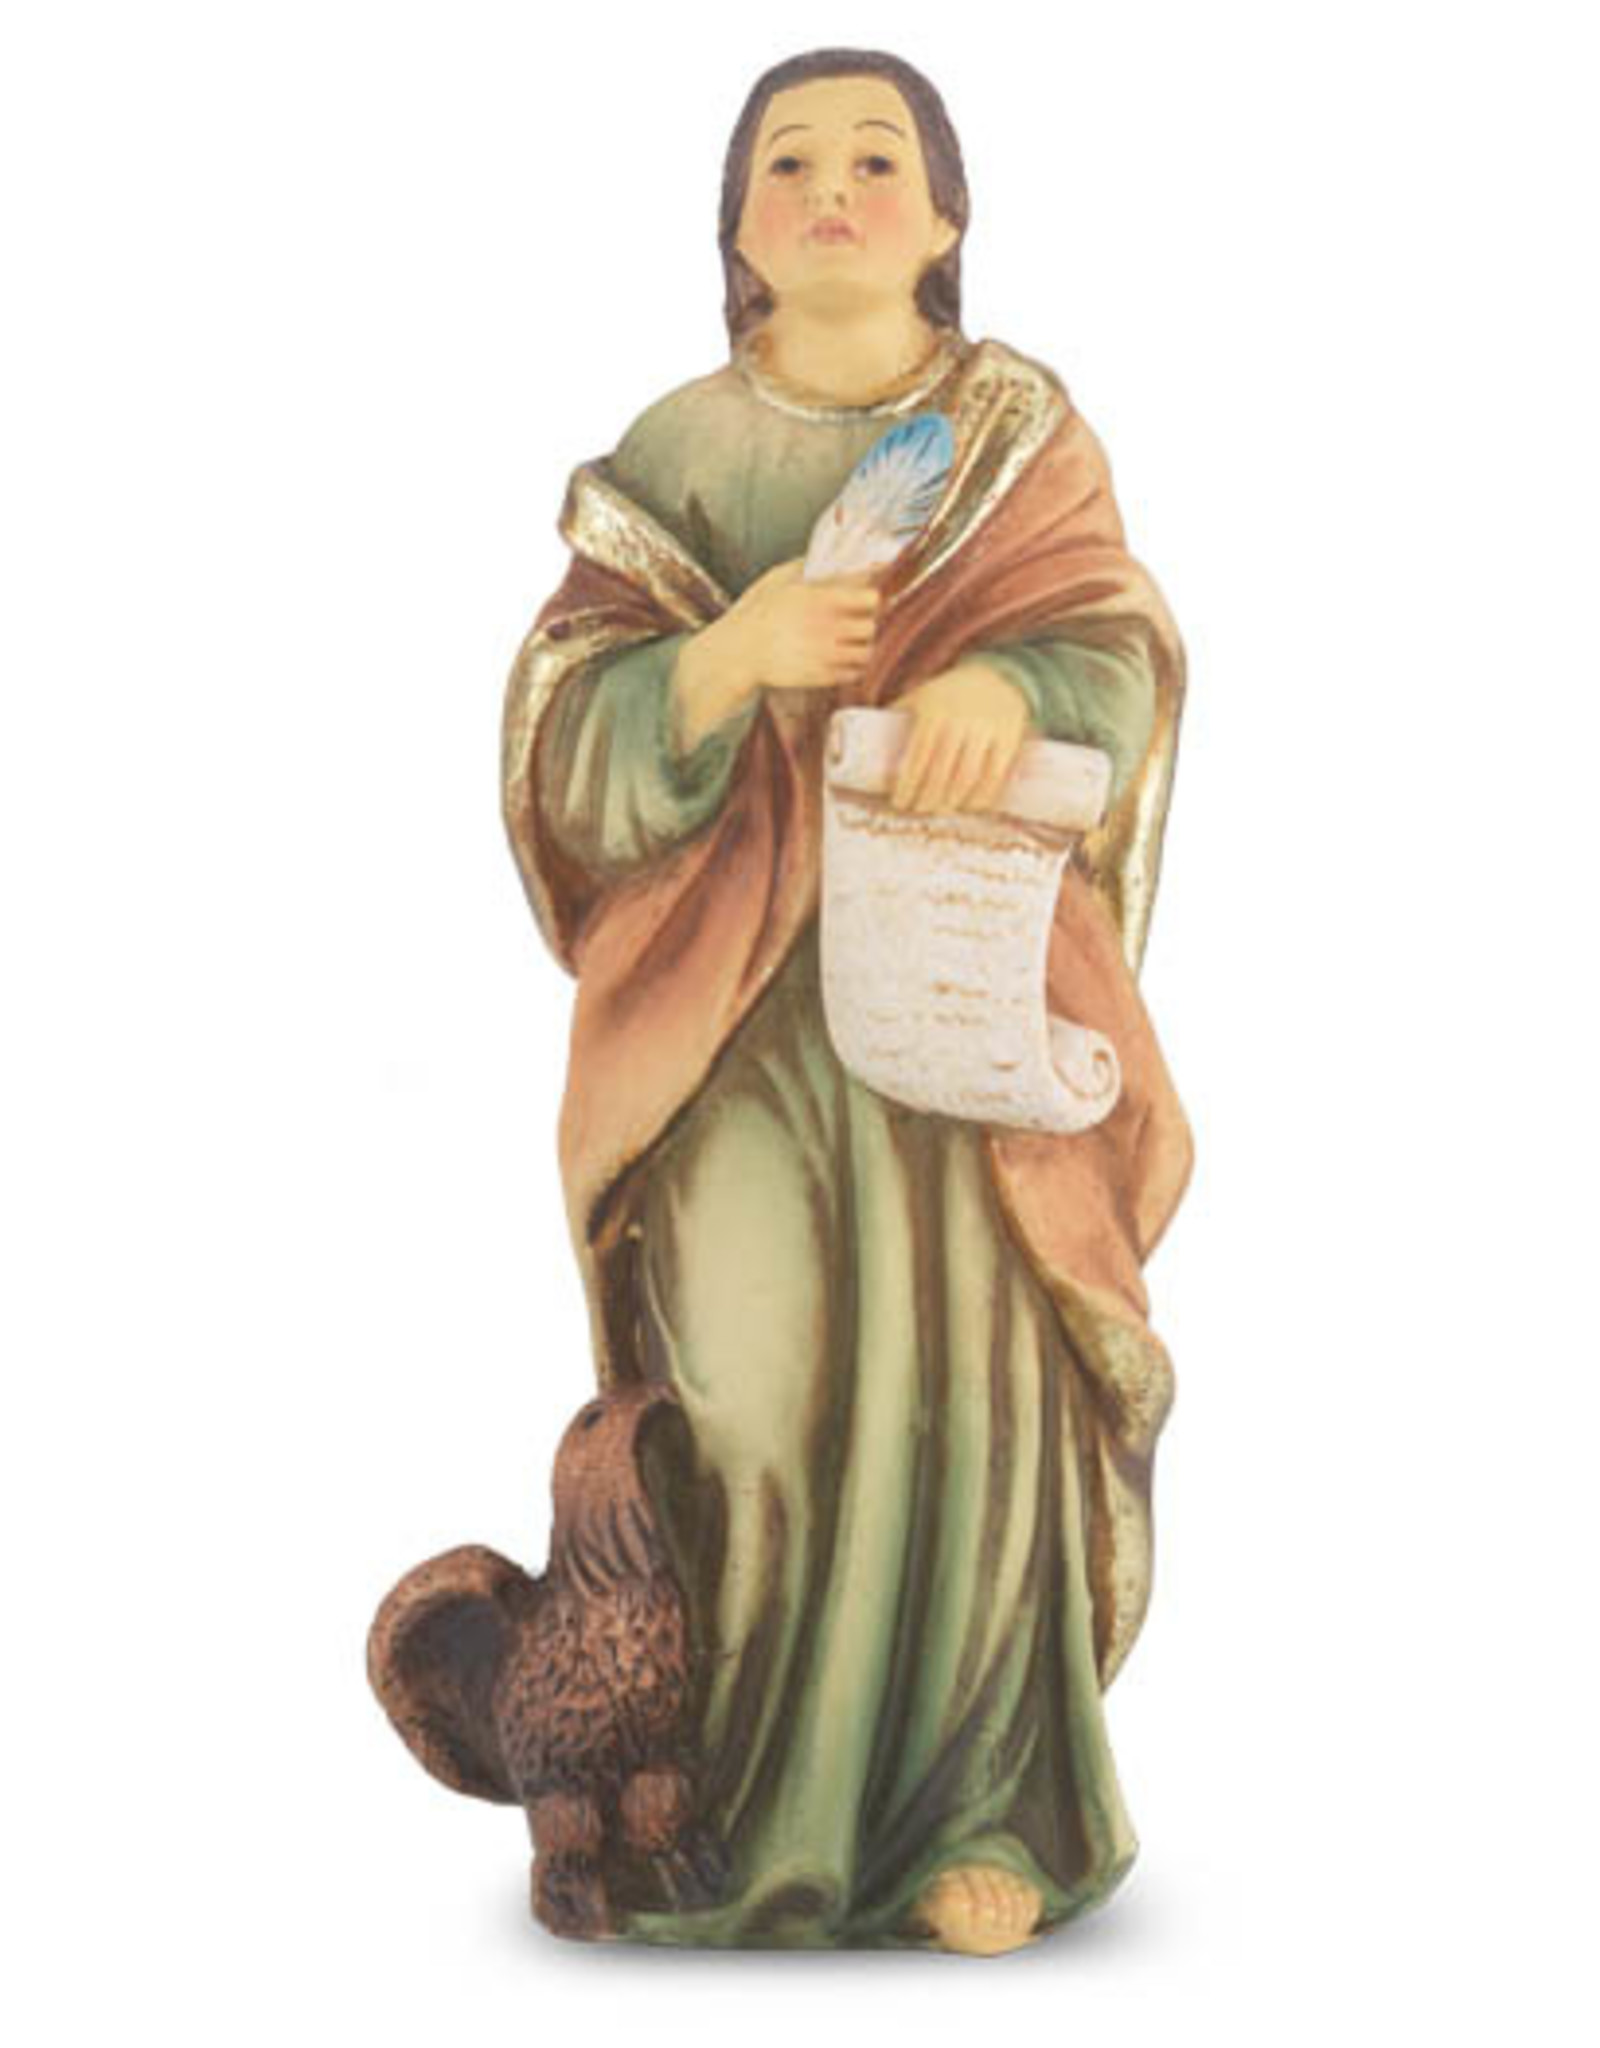 Hirten Patron Saint Statue - St. John the Evangelist